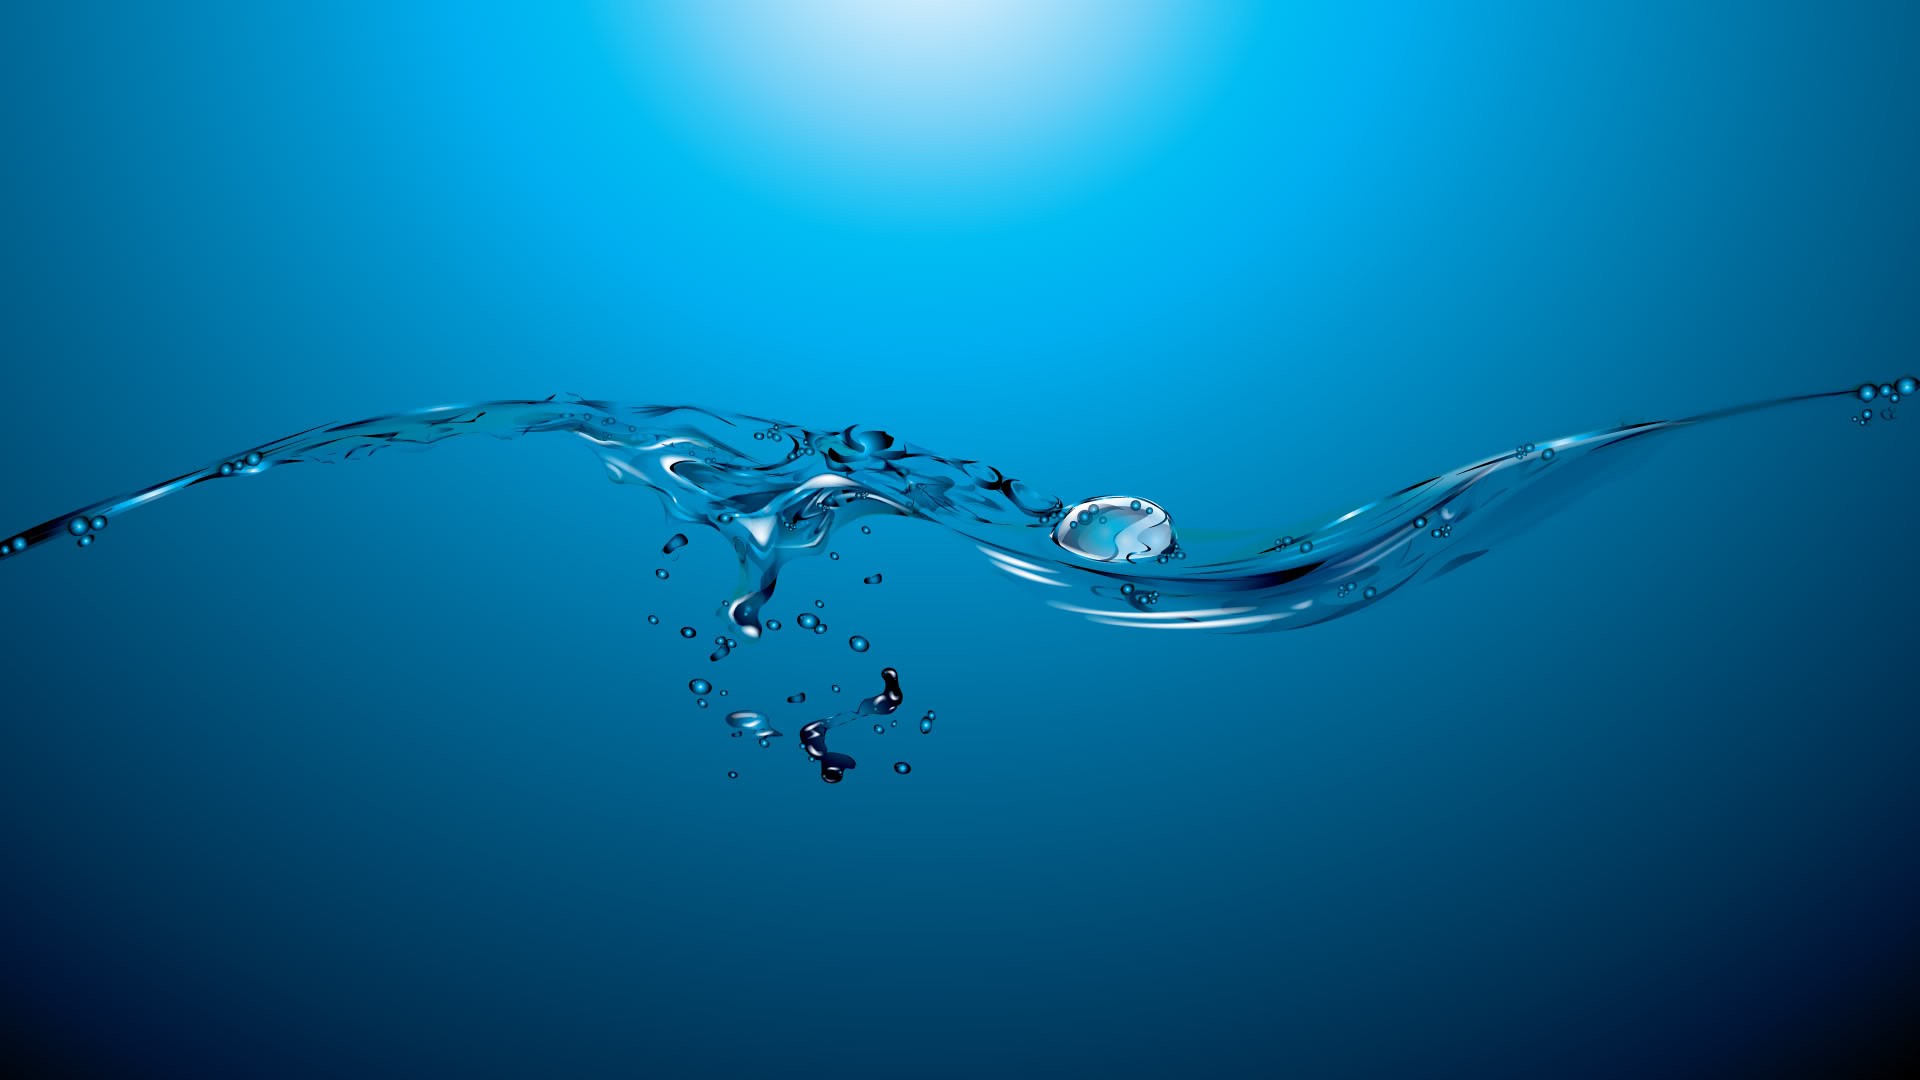 General 1920x1080 digital art minimalism simple background blue water waves bubbles gradient blue background liquid